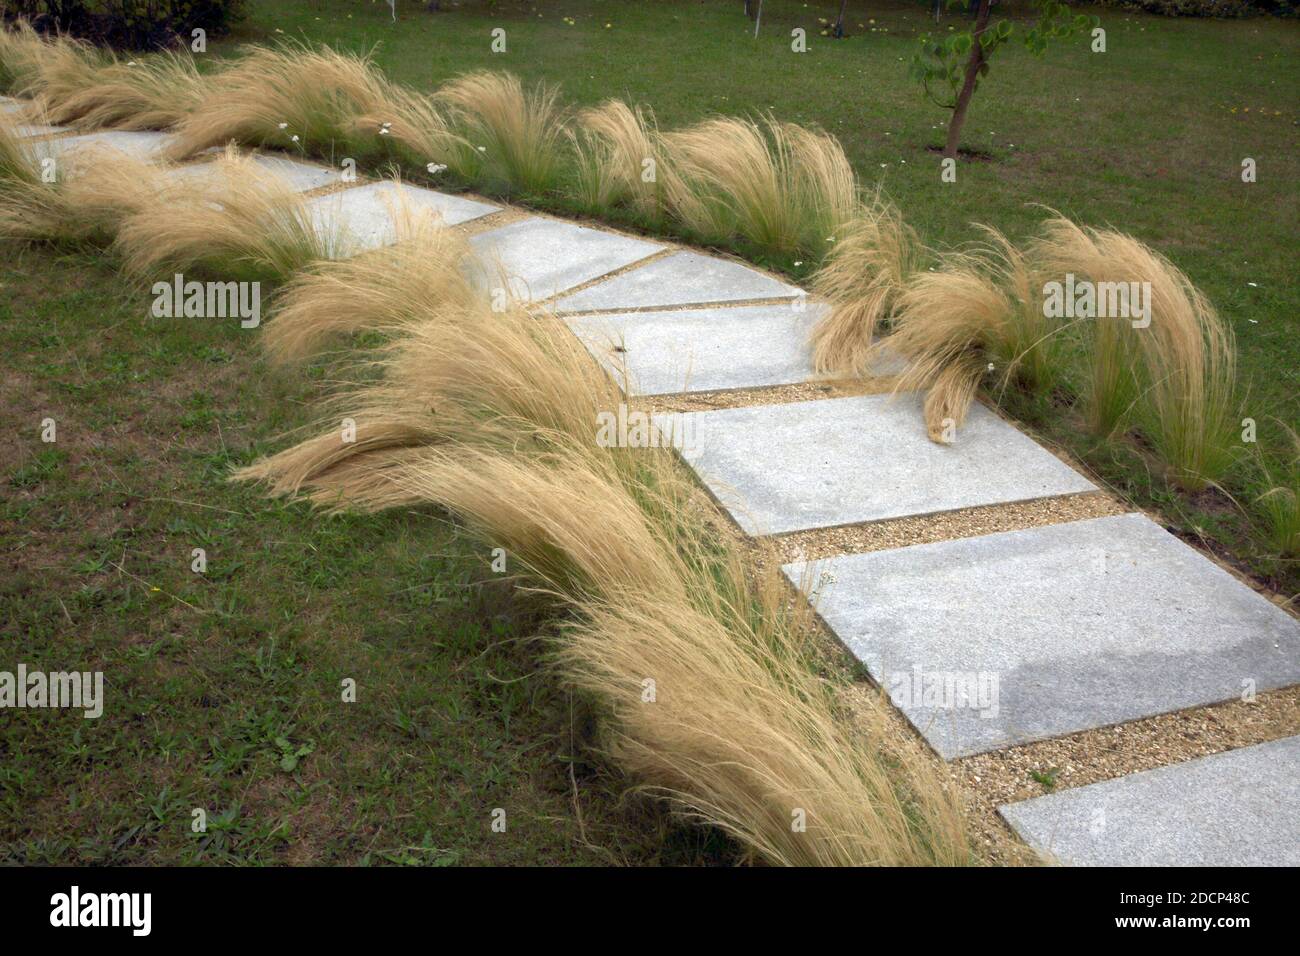 Mexican Feathergrass Lining a Path in Garden Surrey England Stock Photo